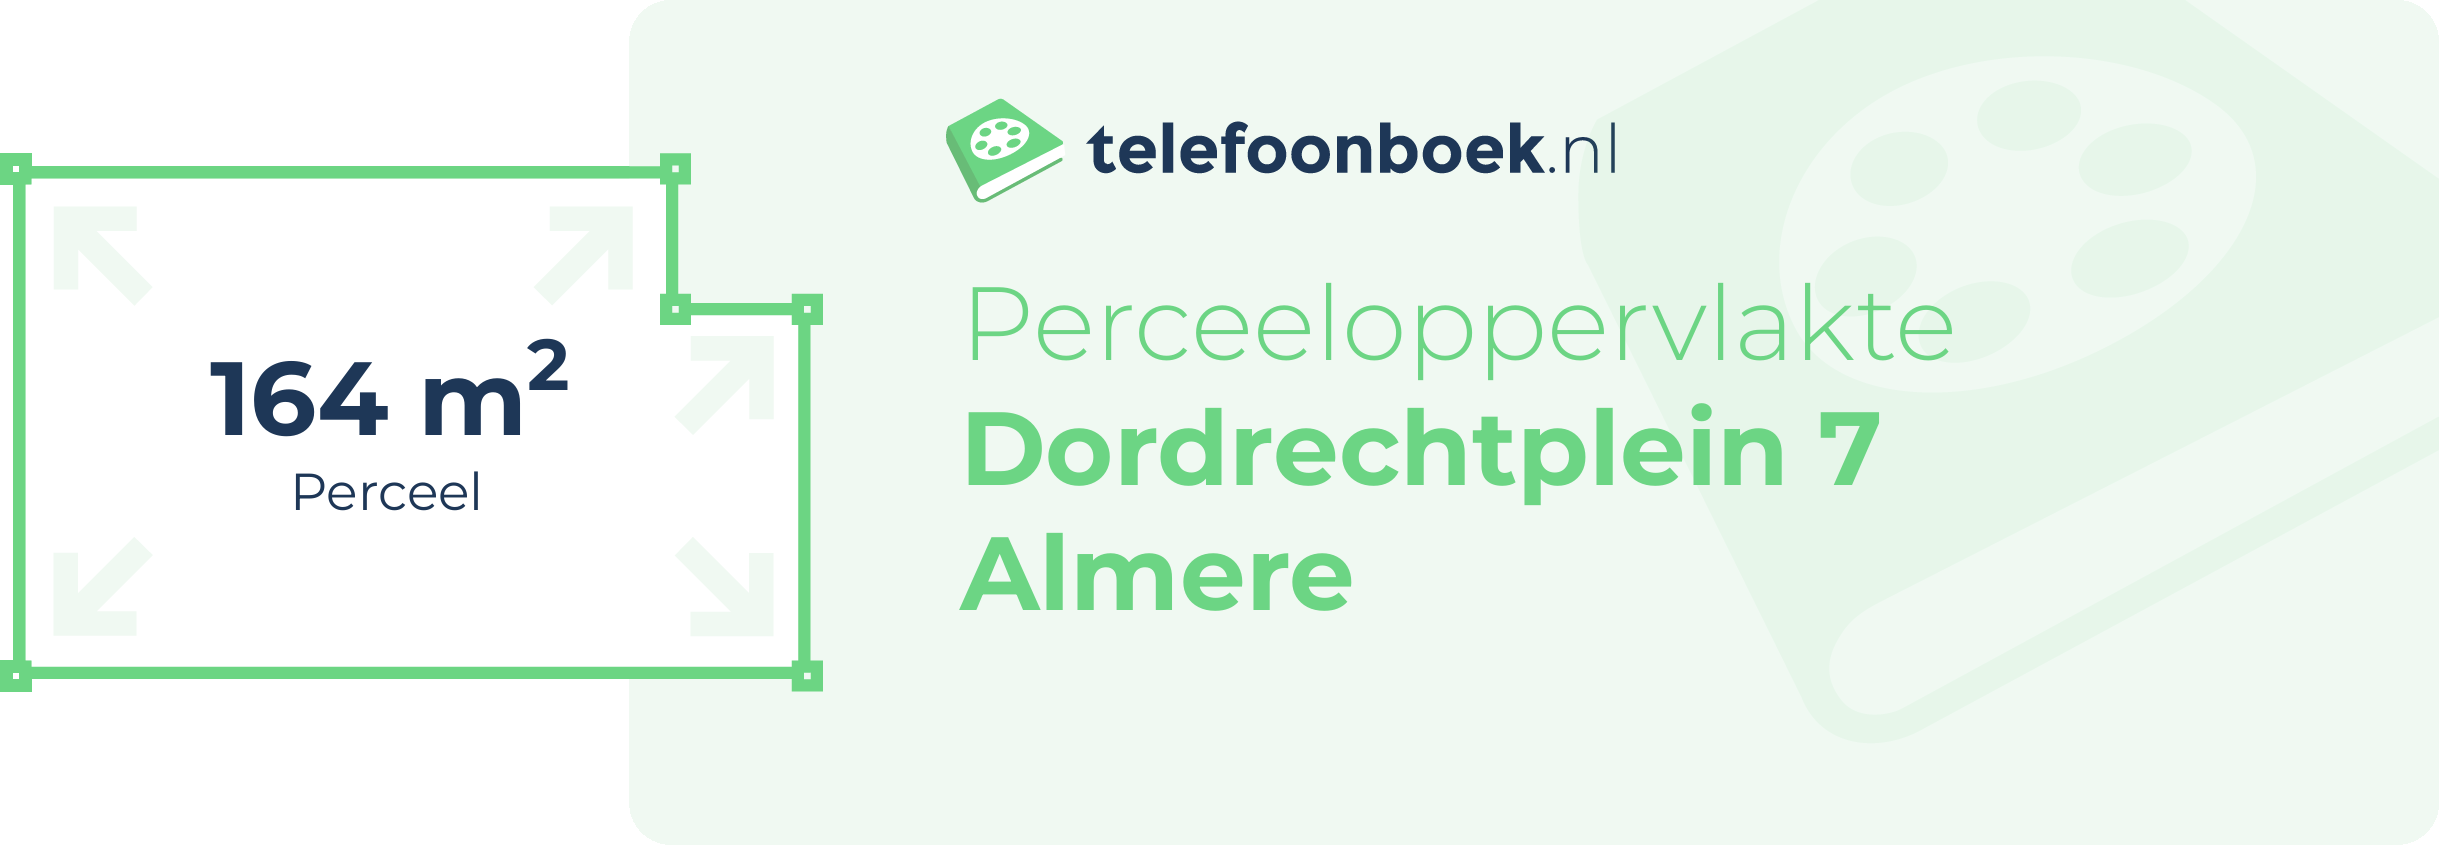 Perceeloppervlakte Dordrechtplein 7 Almere